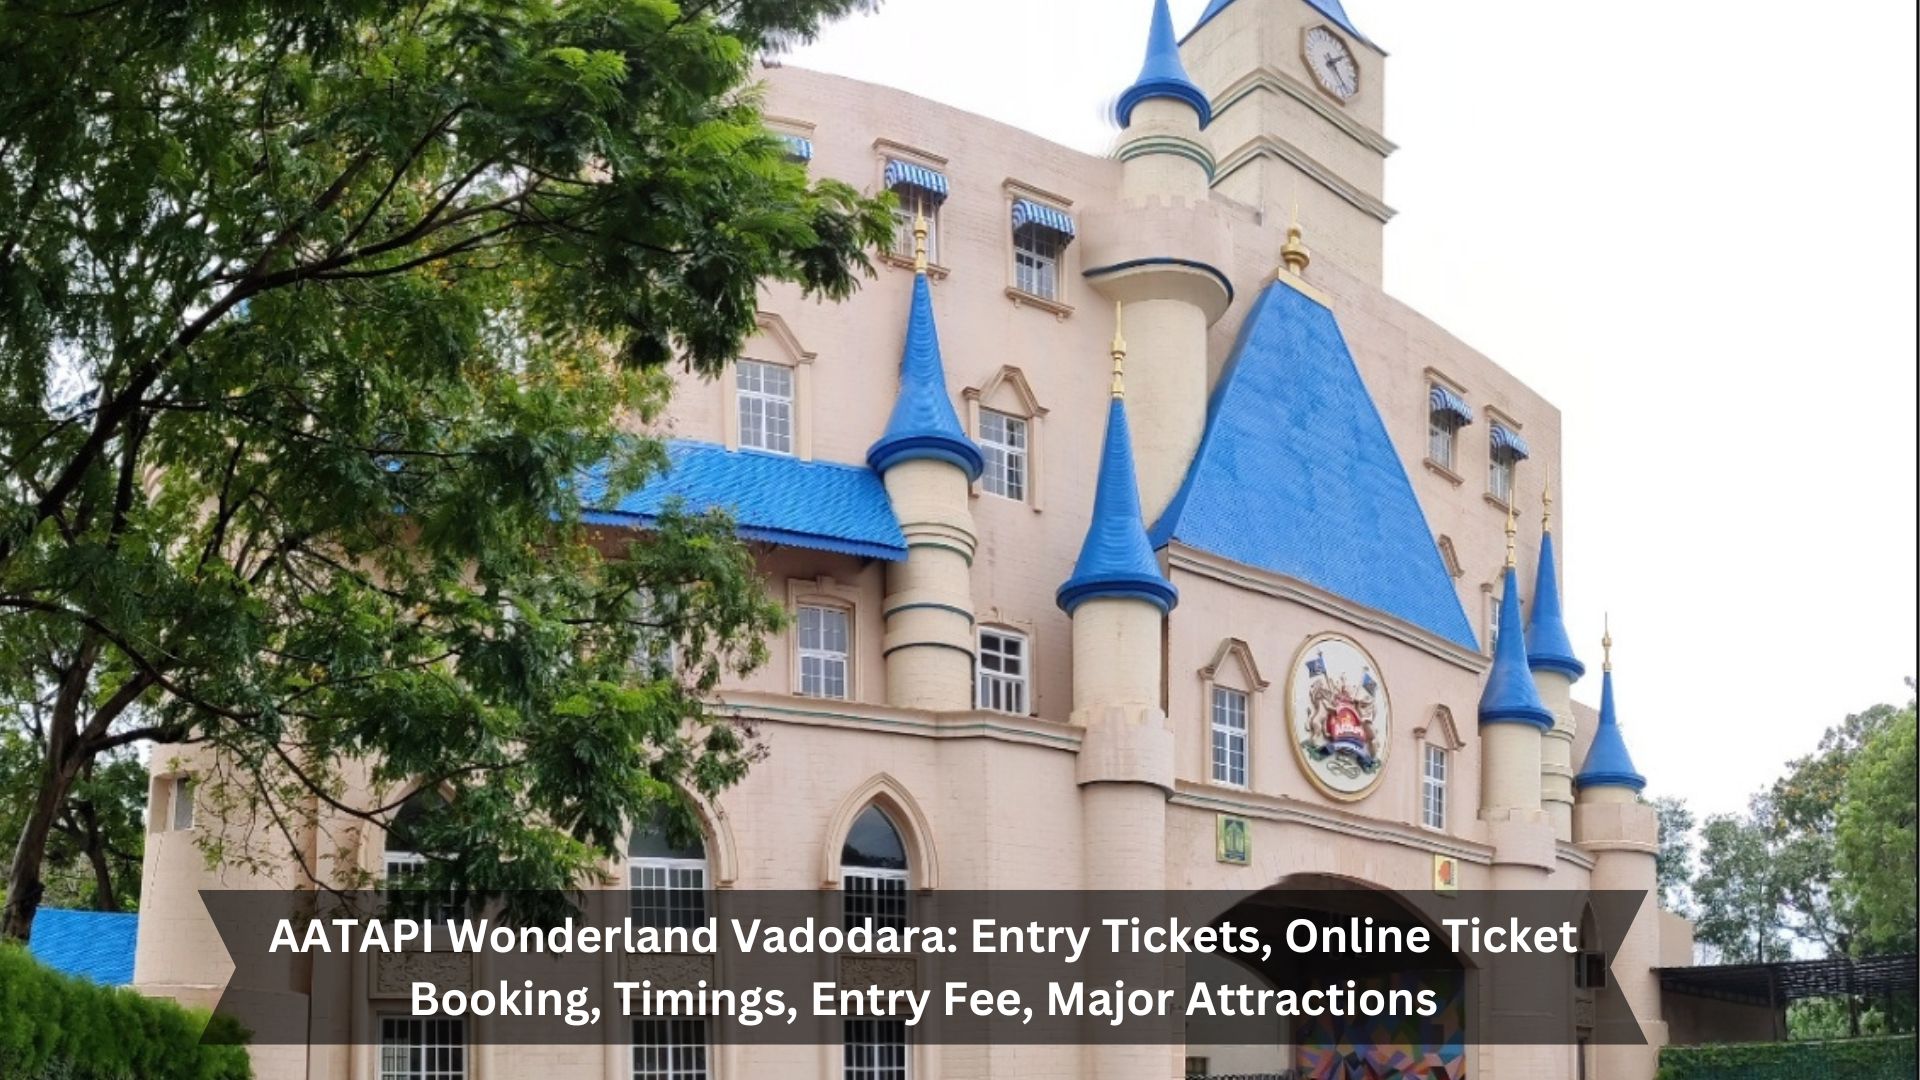 AATAPI-Wonderland-Vadodara-Entry-Tickets-Online-Ticket-Booking-Timings-Entry-Fee-Major-Attractions